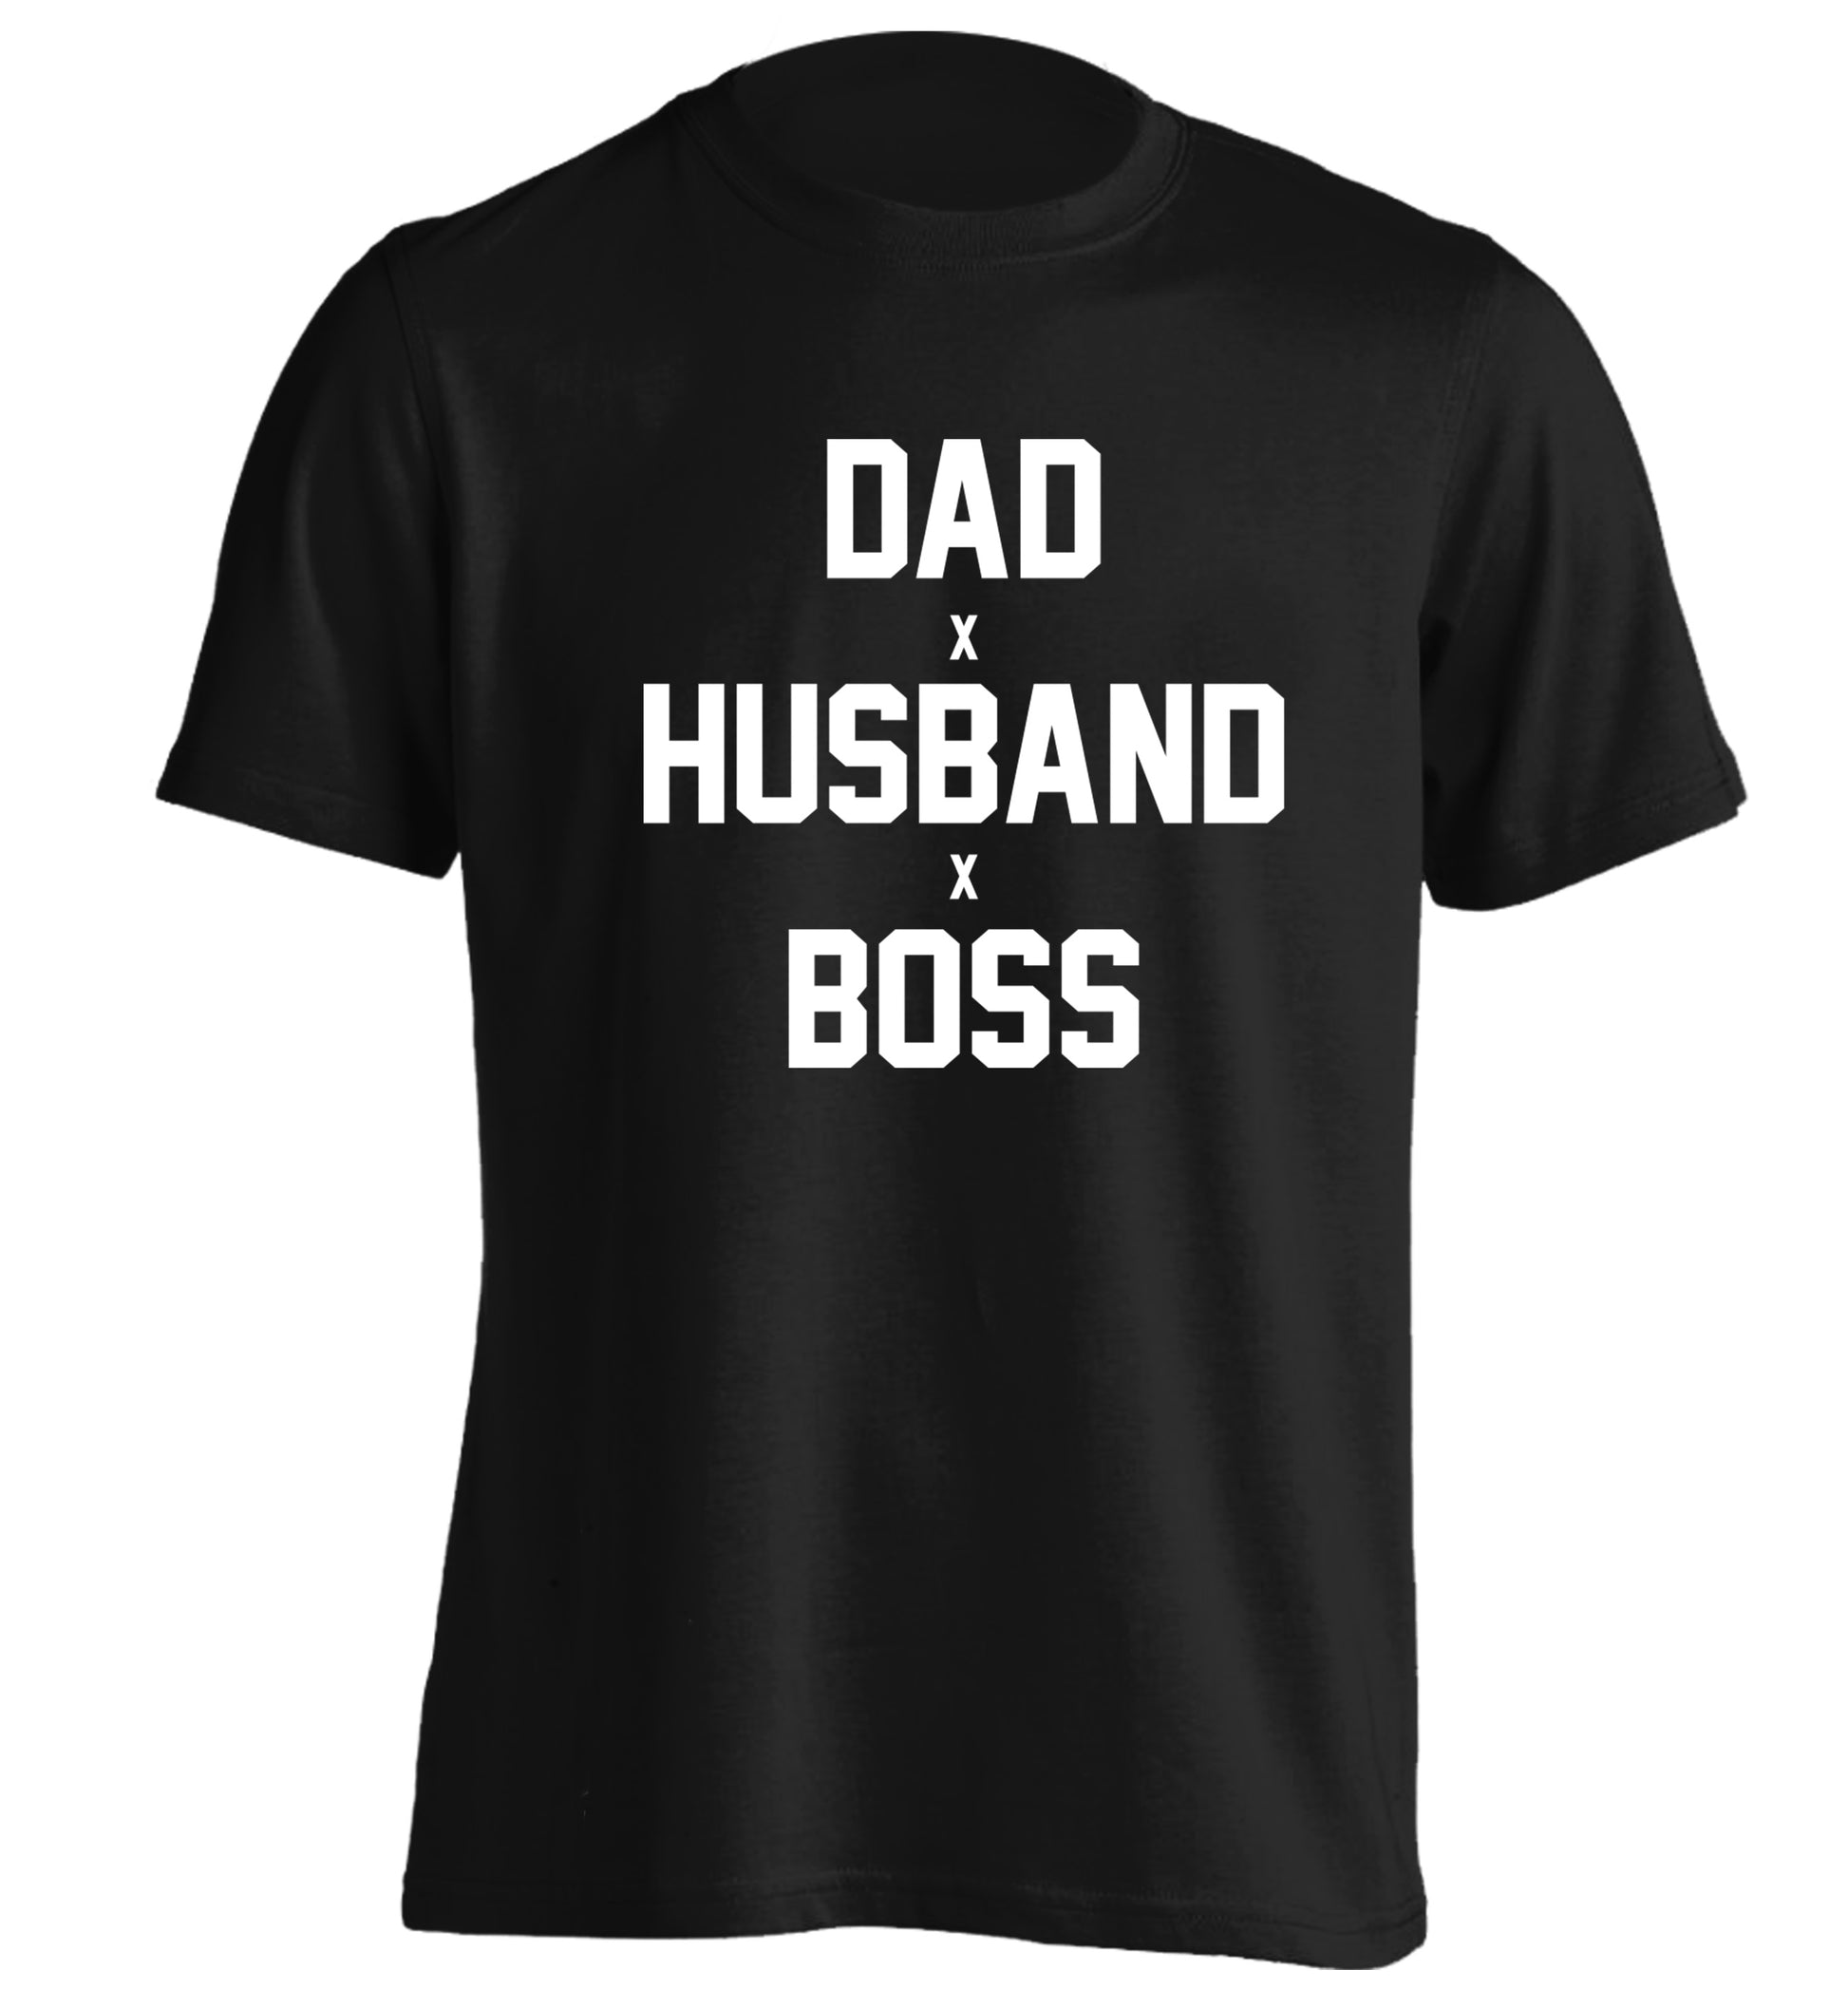 Dad husband boss adults unisex black Tshirt 2XL